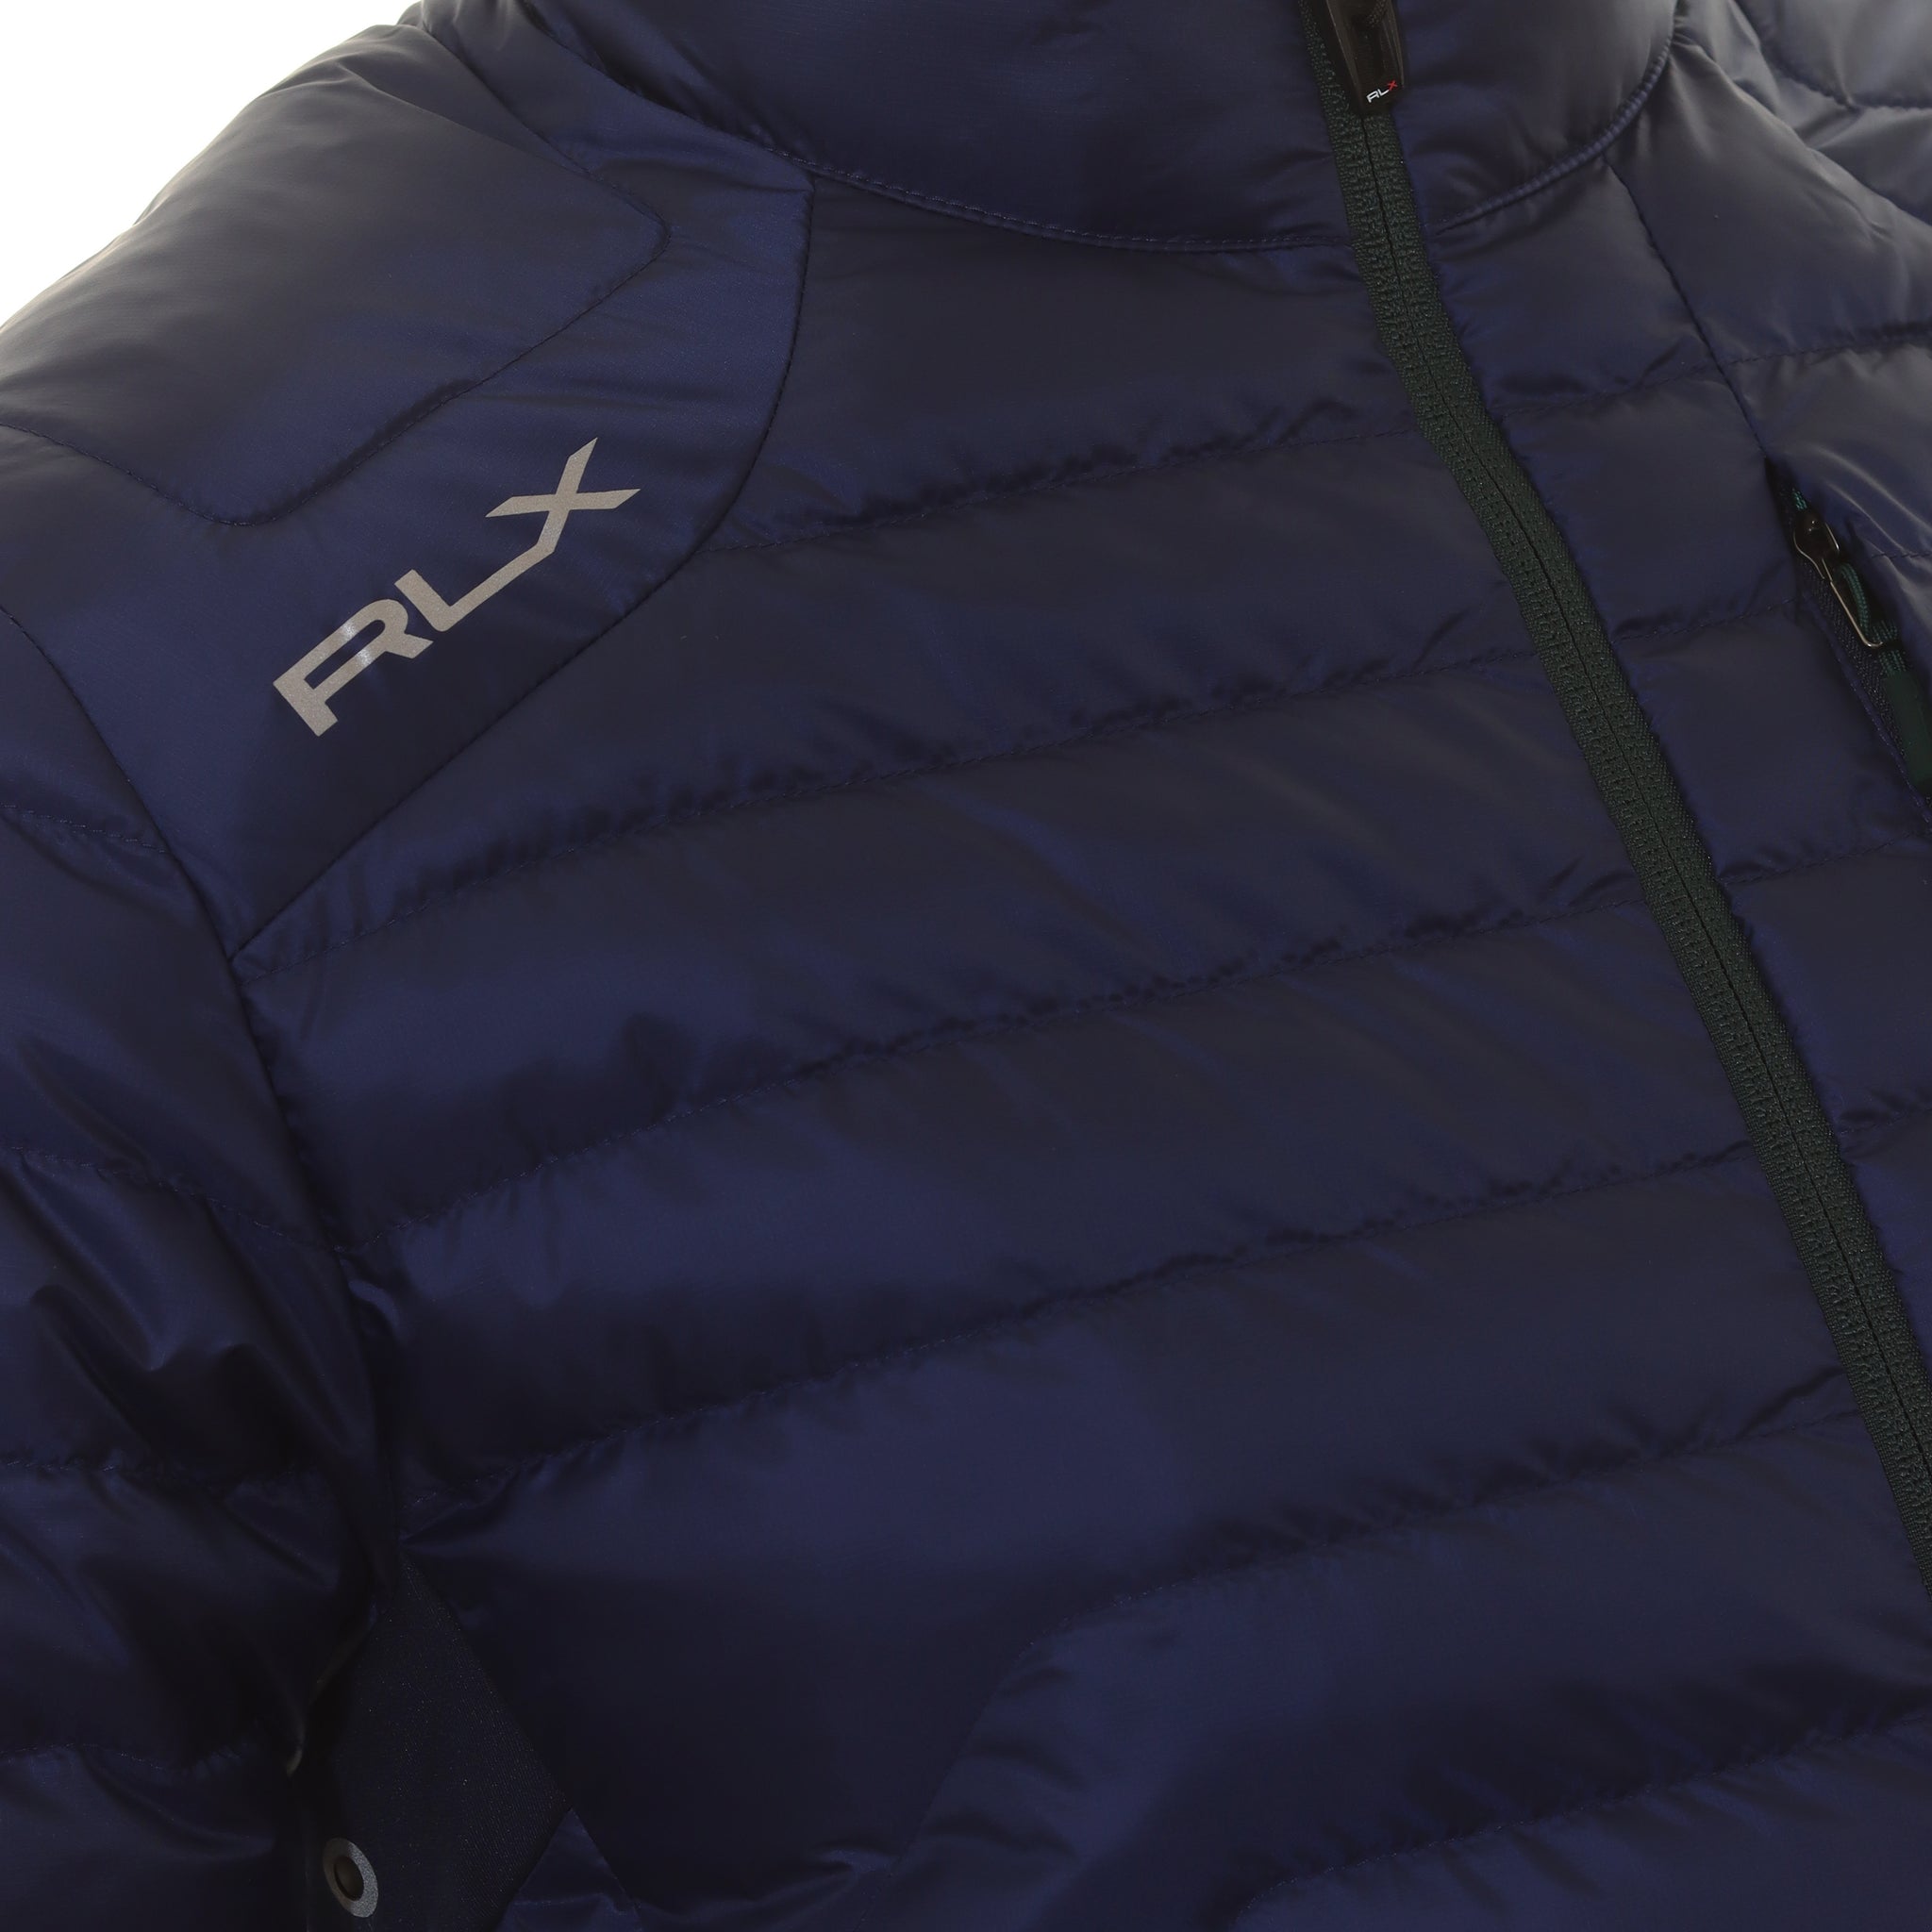 rlx-ralph-lauren-pivot-filled-jacket-785915649-refined-navy-002